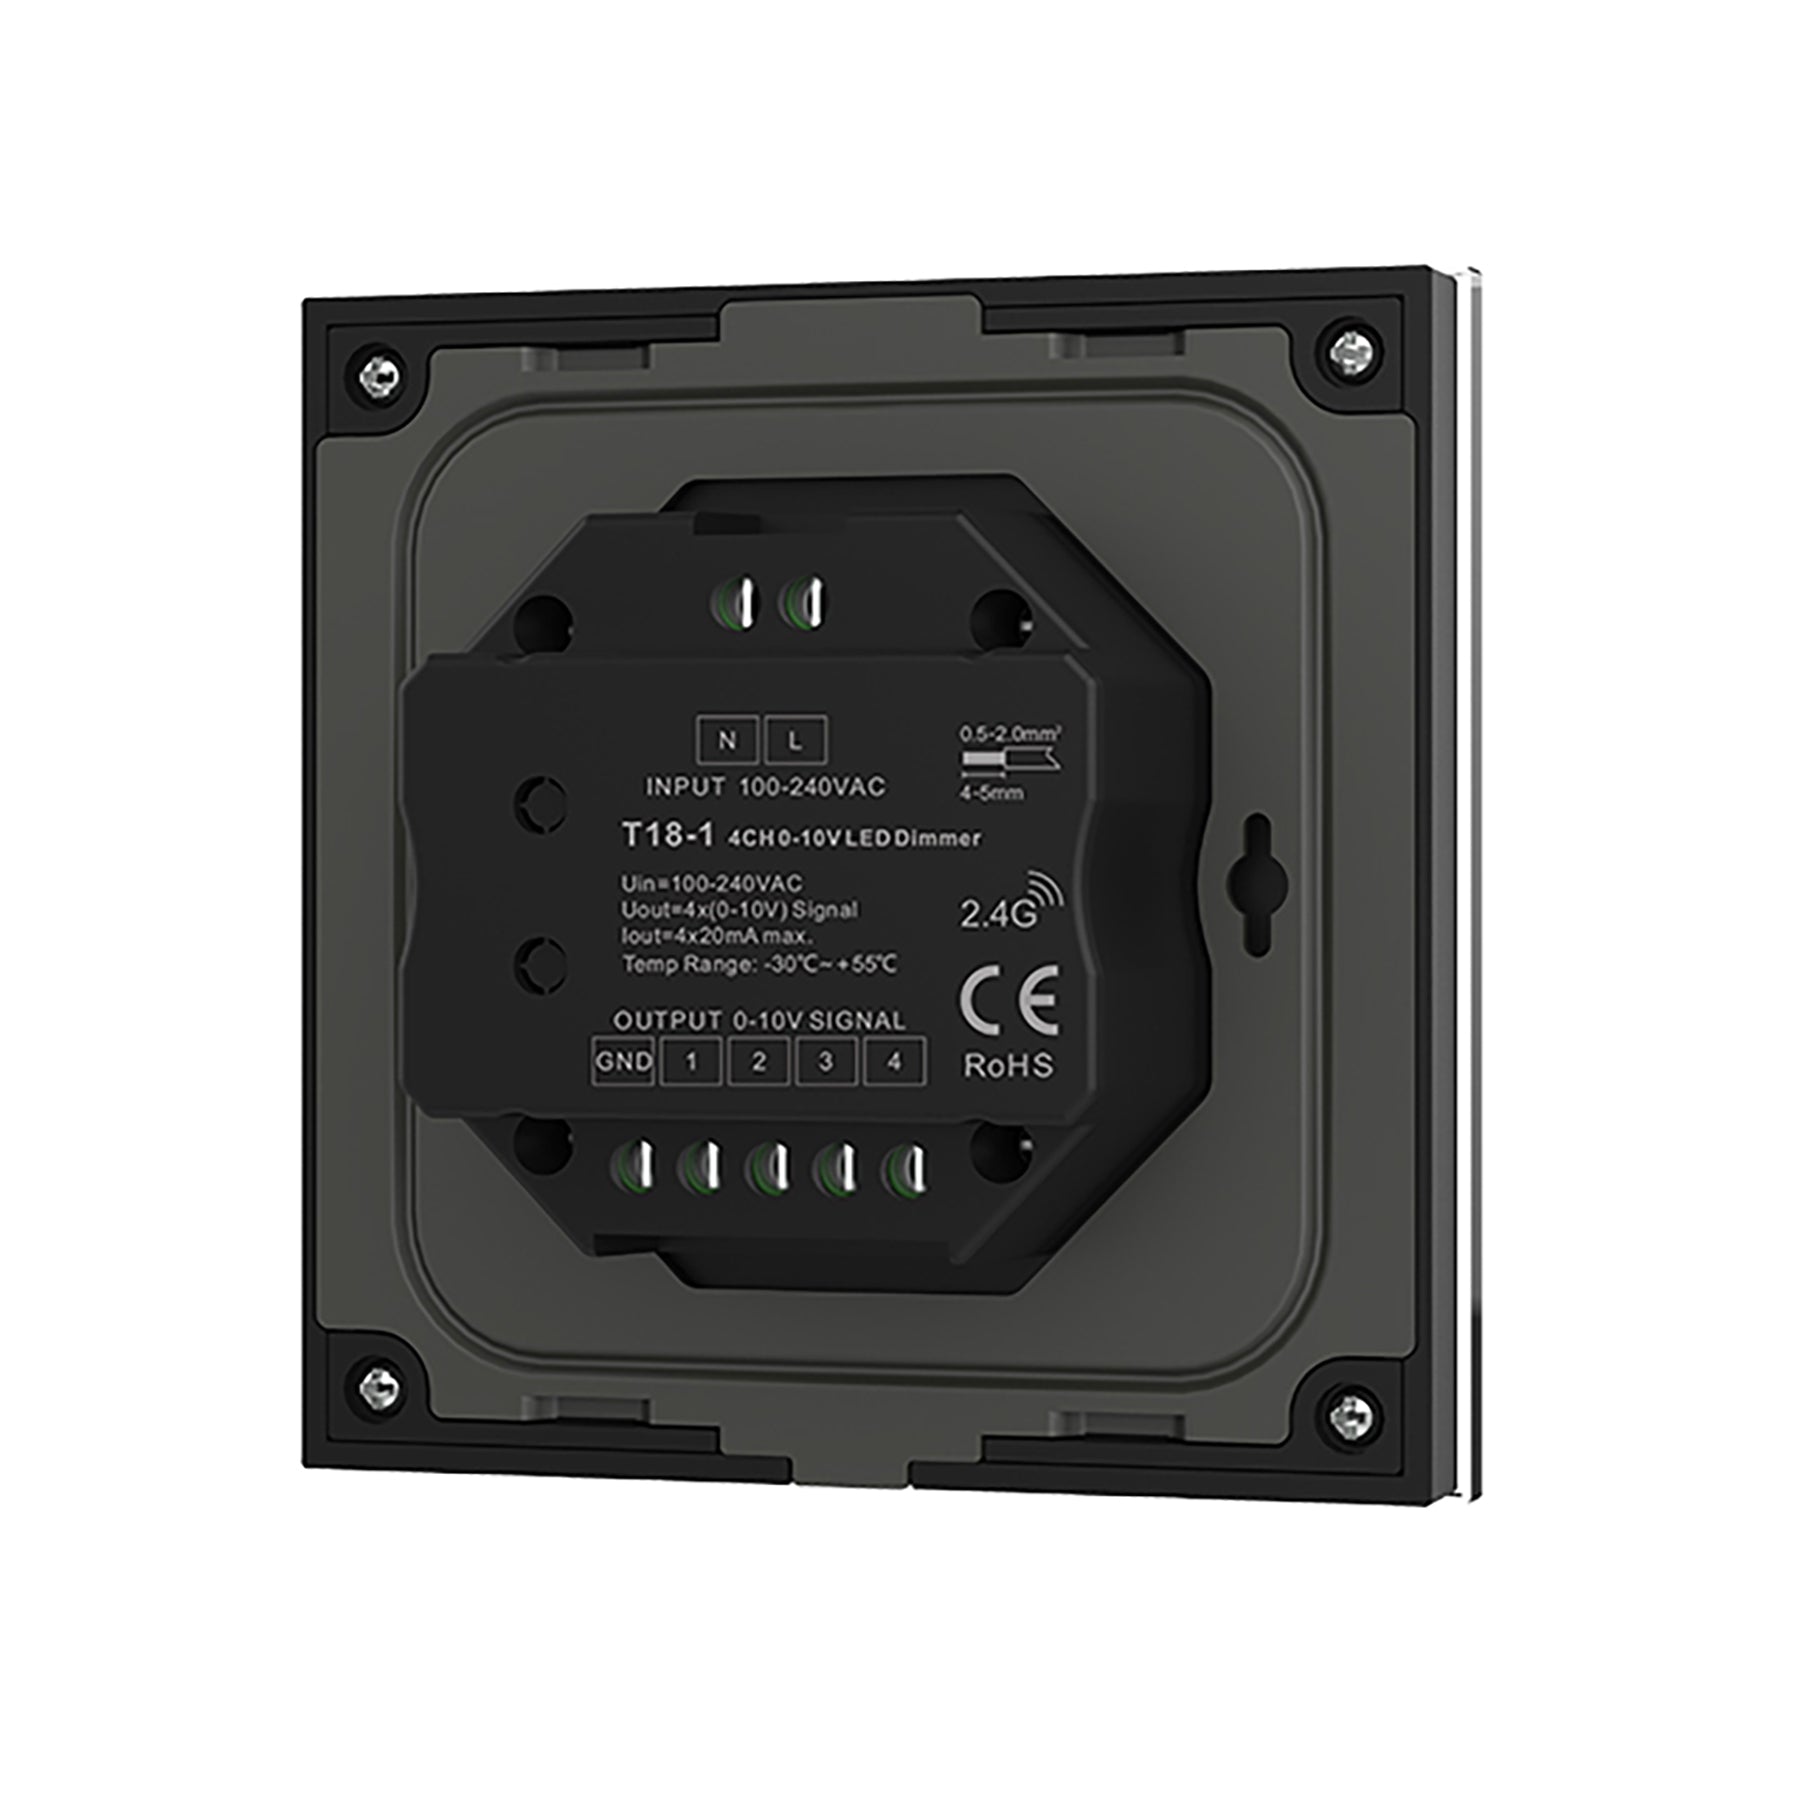 G.W.S. LED 4 Zones Touch Panel 0-10V Dimmer T18-1